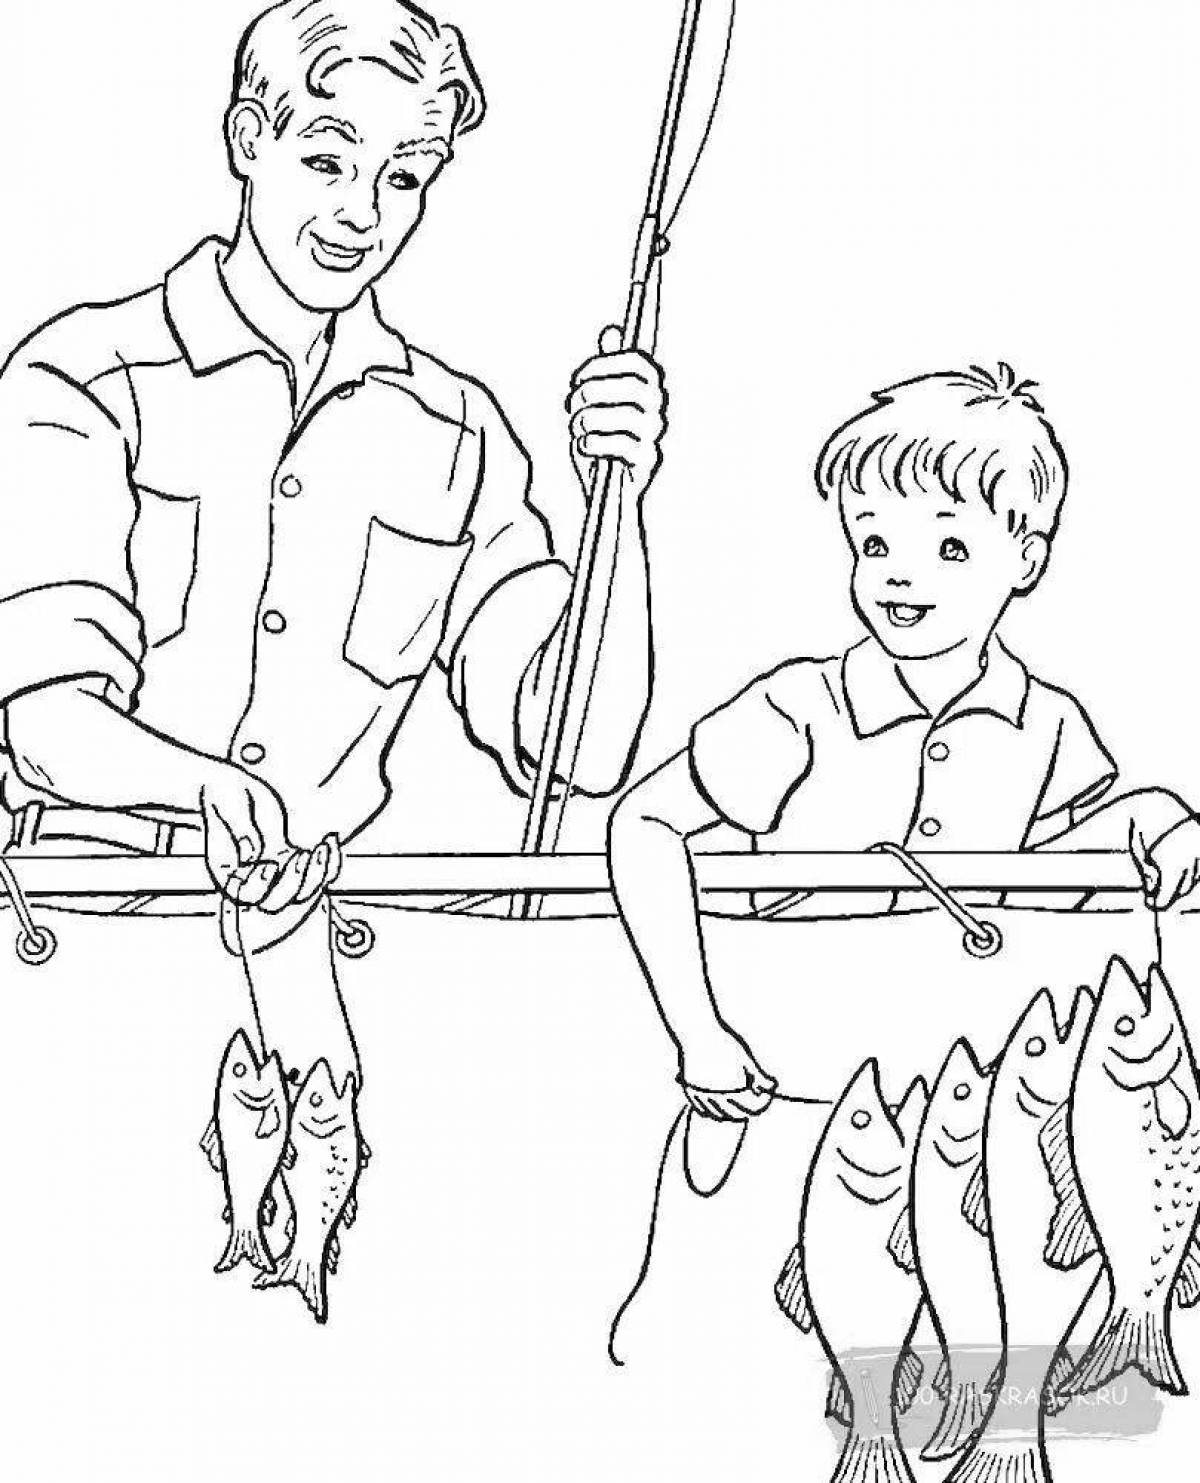 Fun fishing coloring for kids